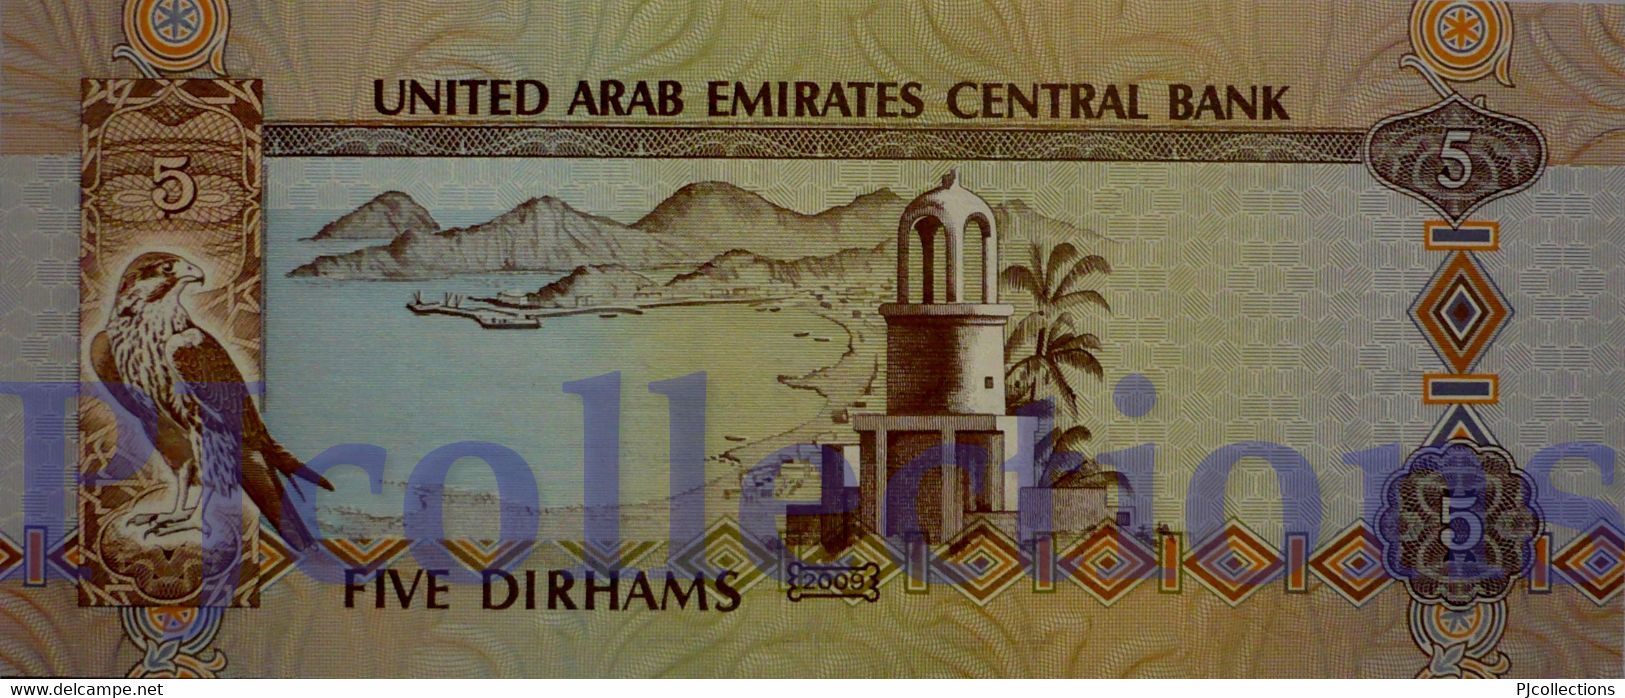 LOT UNITED ARAB EMIRATES 5 DIRHAMS 2009 PICK 26a UNC X 5 PCS - Emirati Arabi Uniti